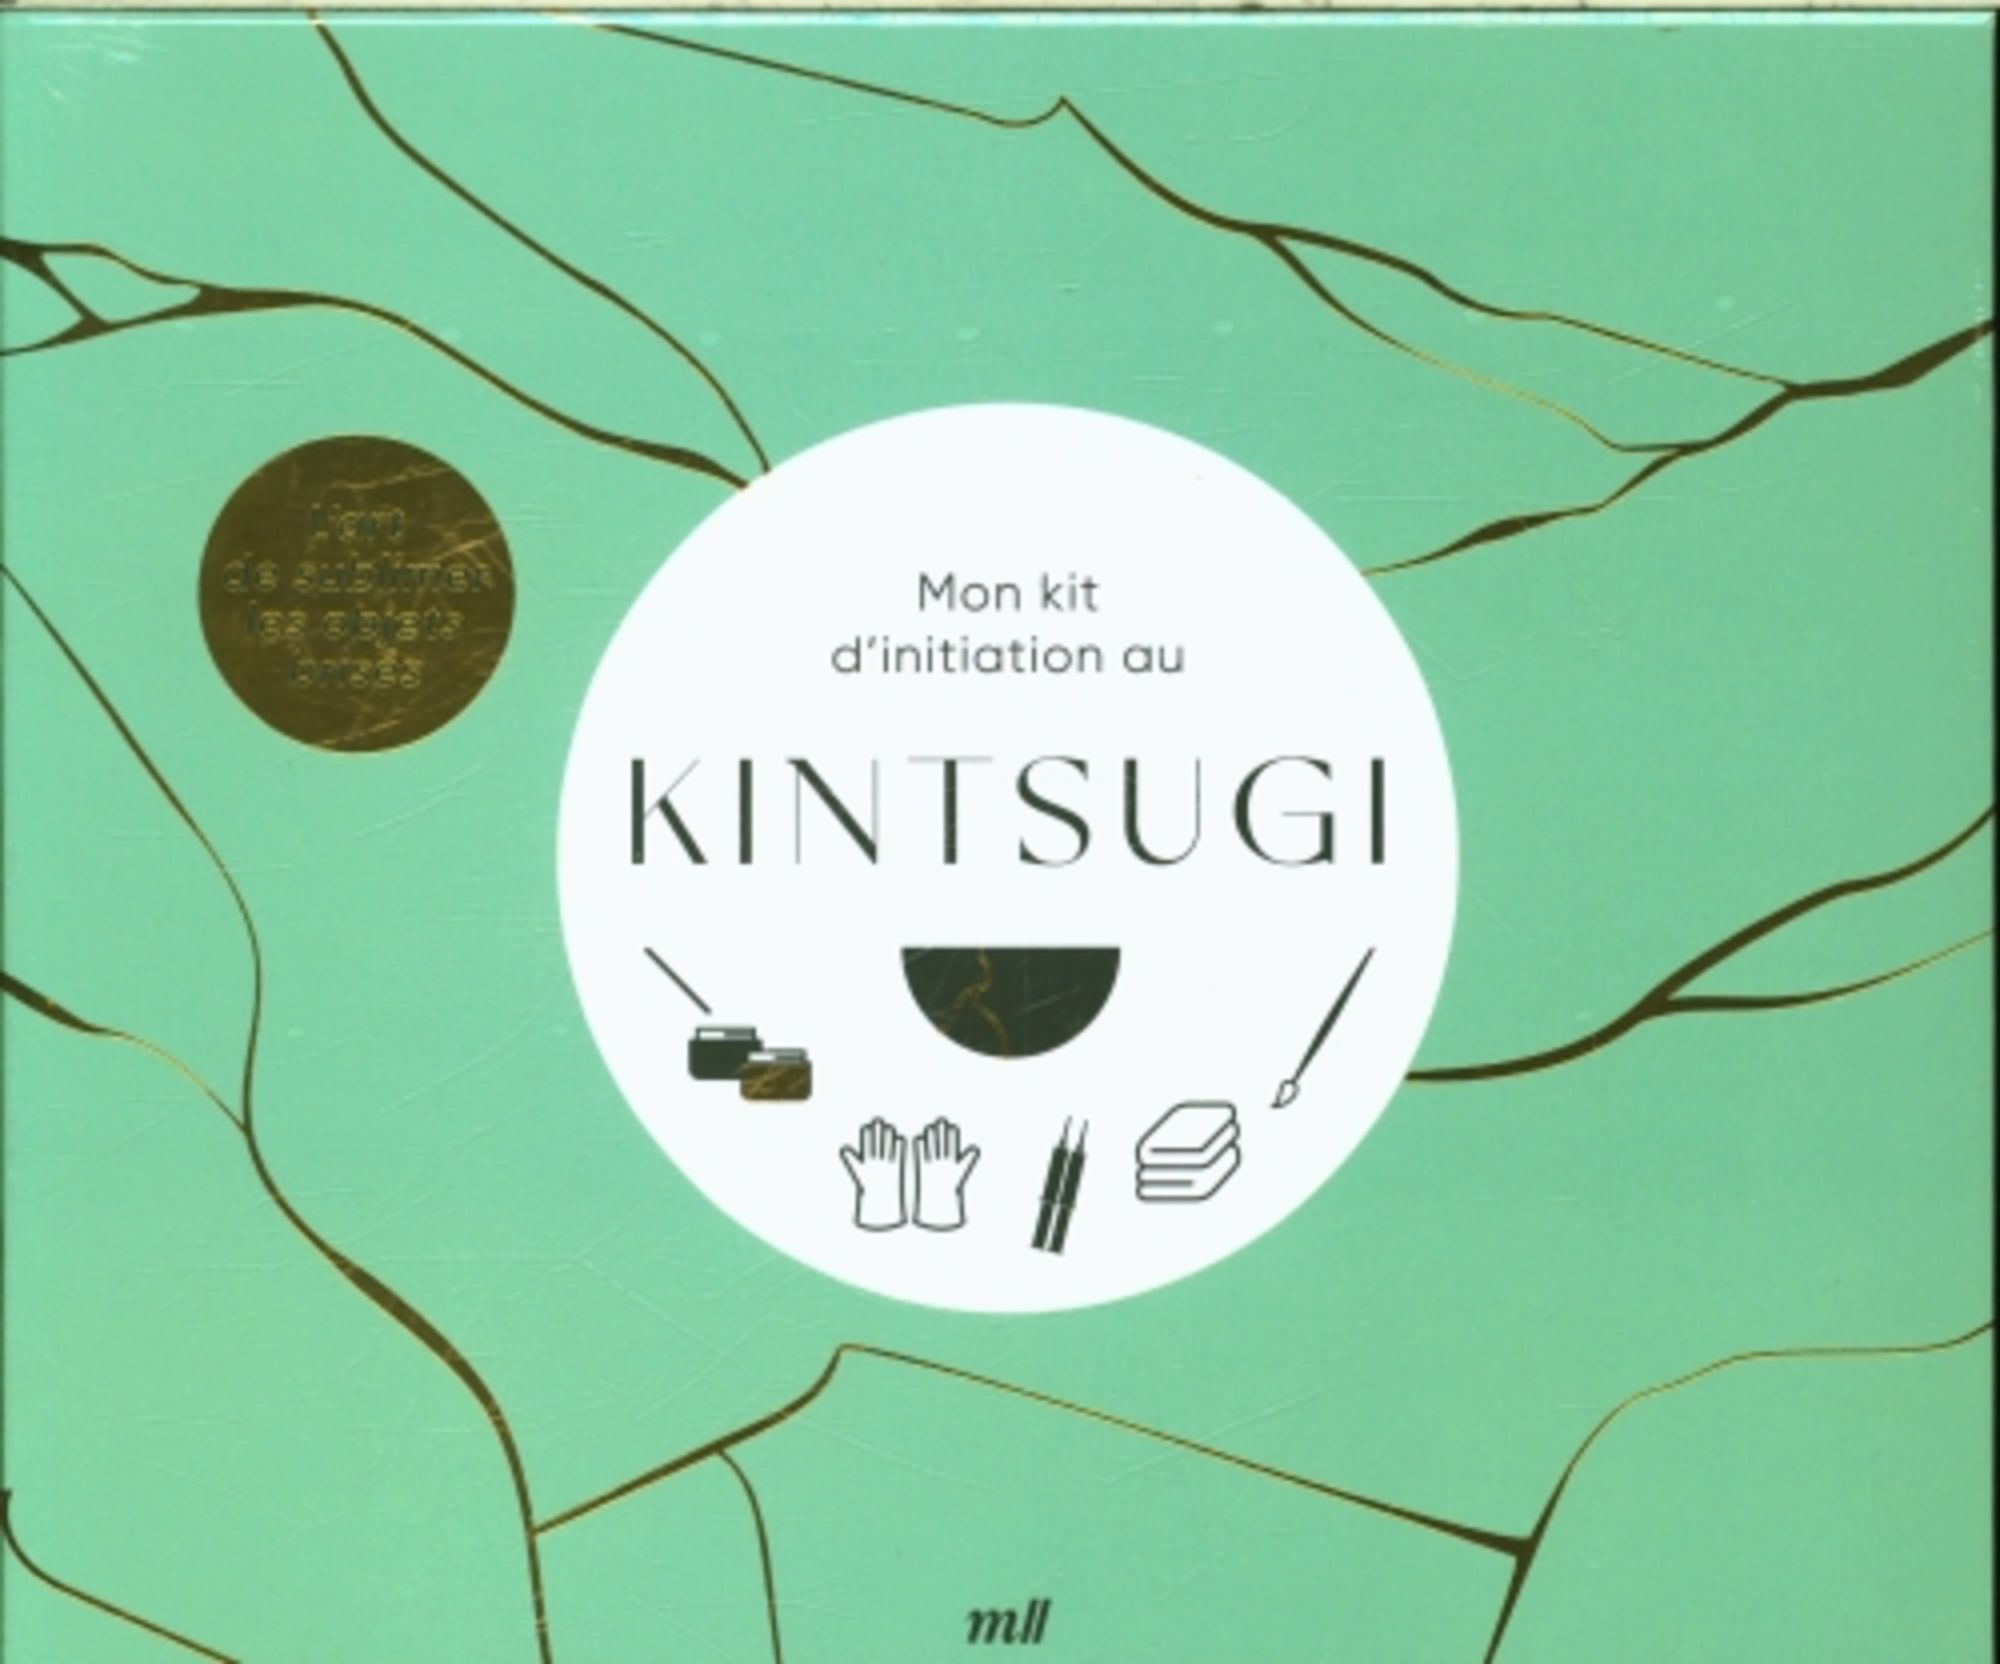 The complete kintsugi initiation kit